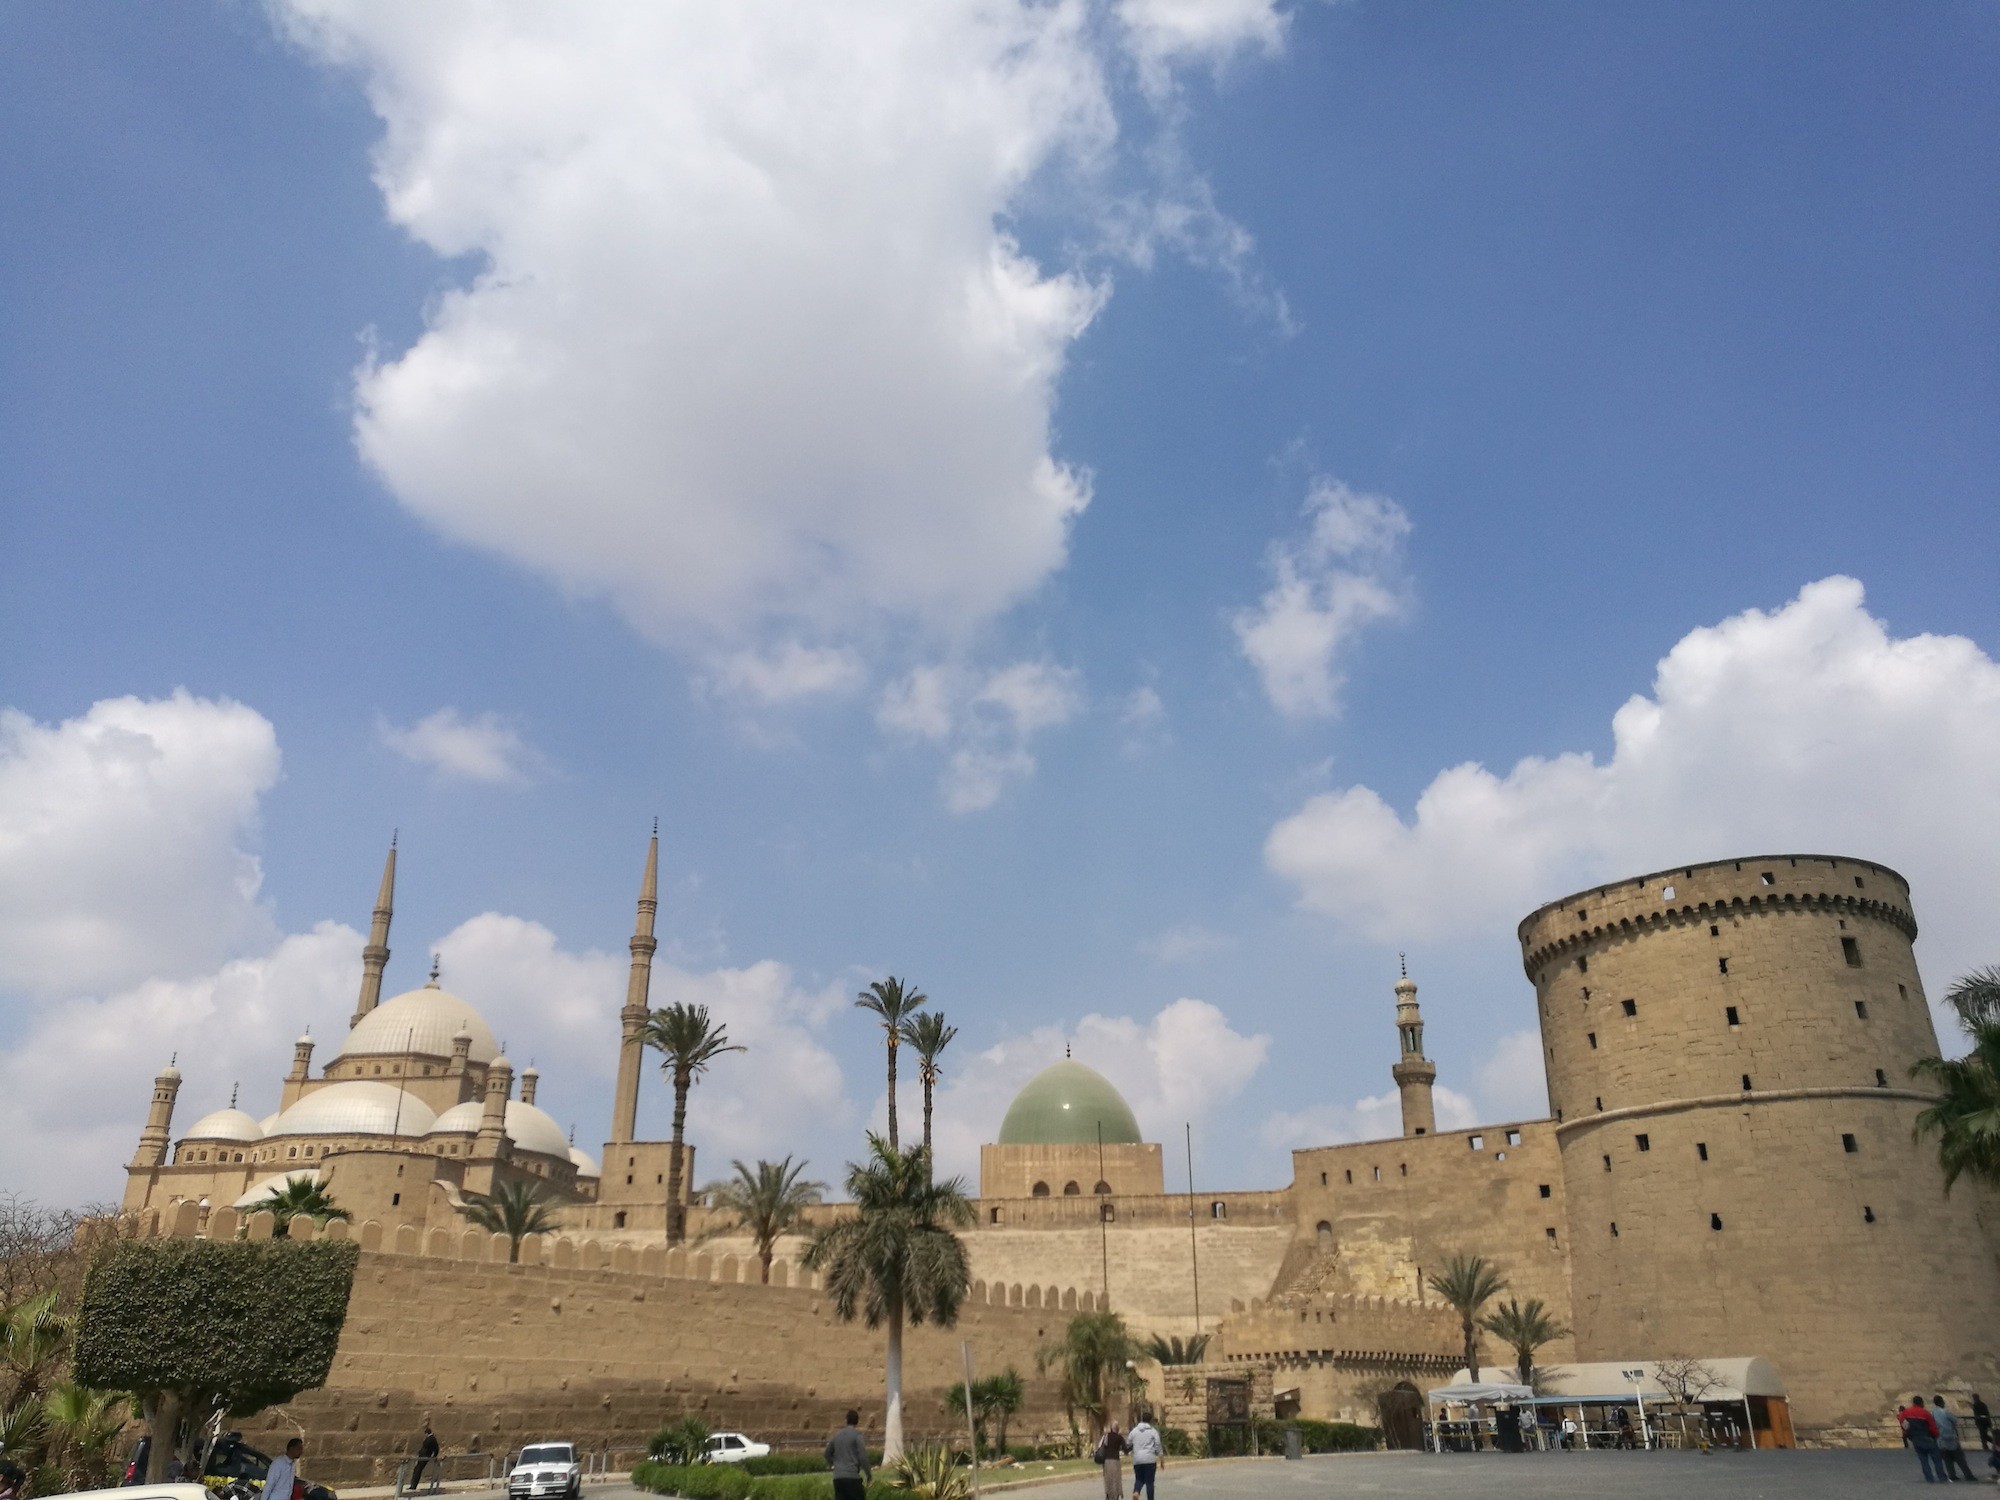 Salah el-Din Citadel高耸的城墙和塔楼是中世纪堡垒的典型特征，让人有一种气势磅礴的感觉。